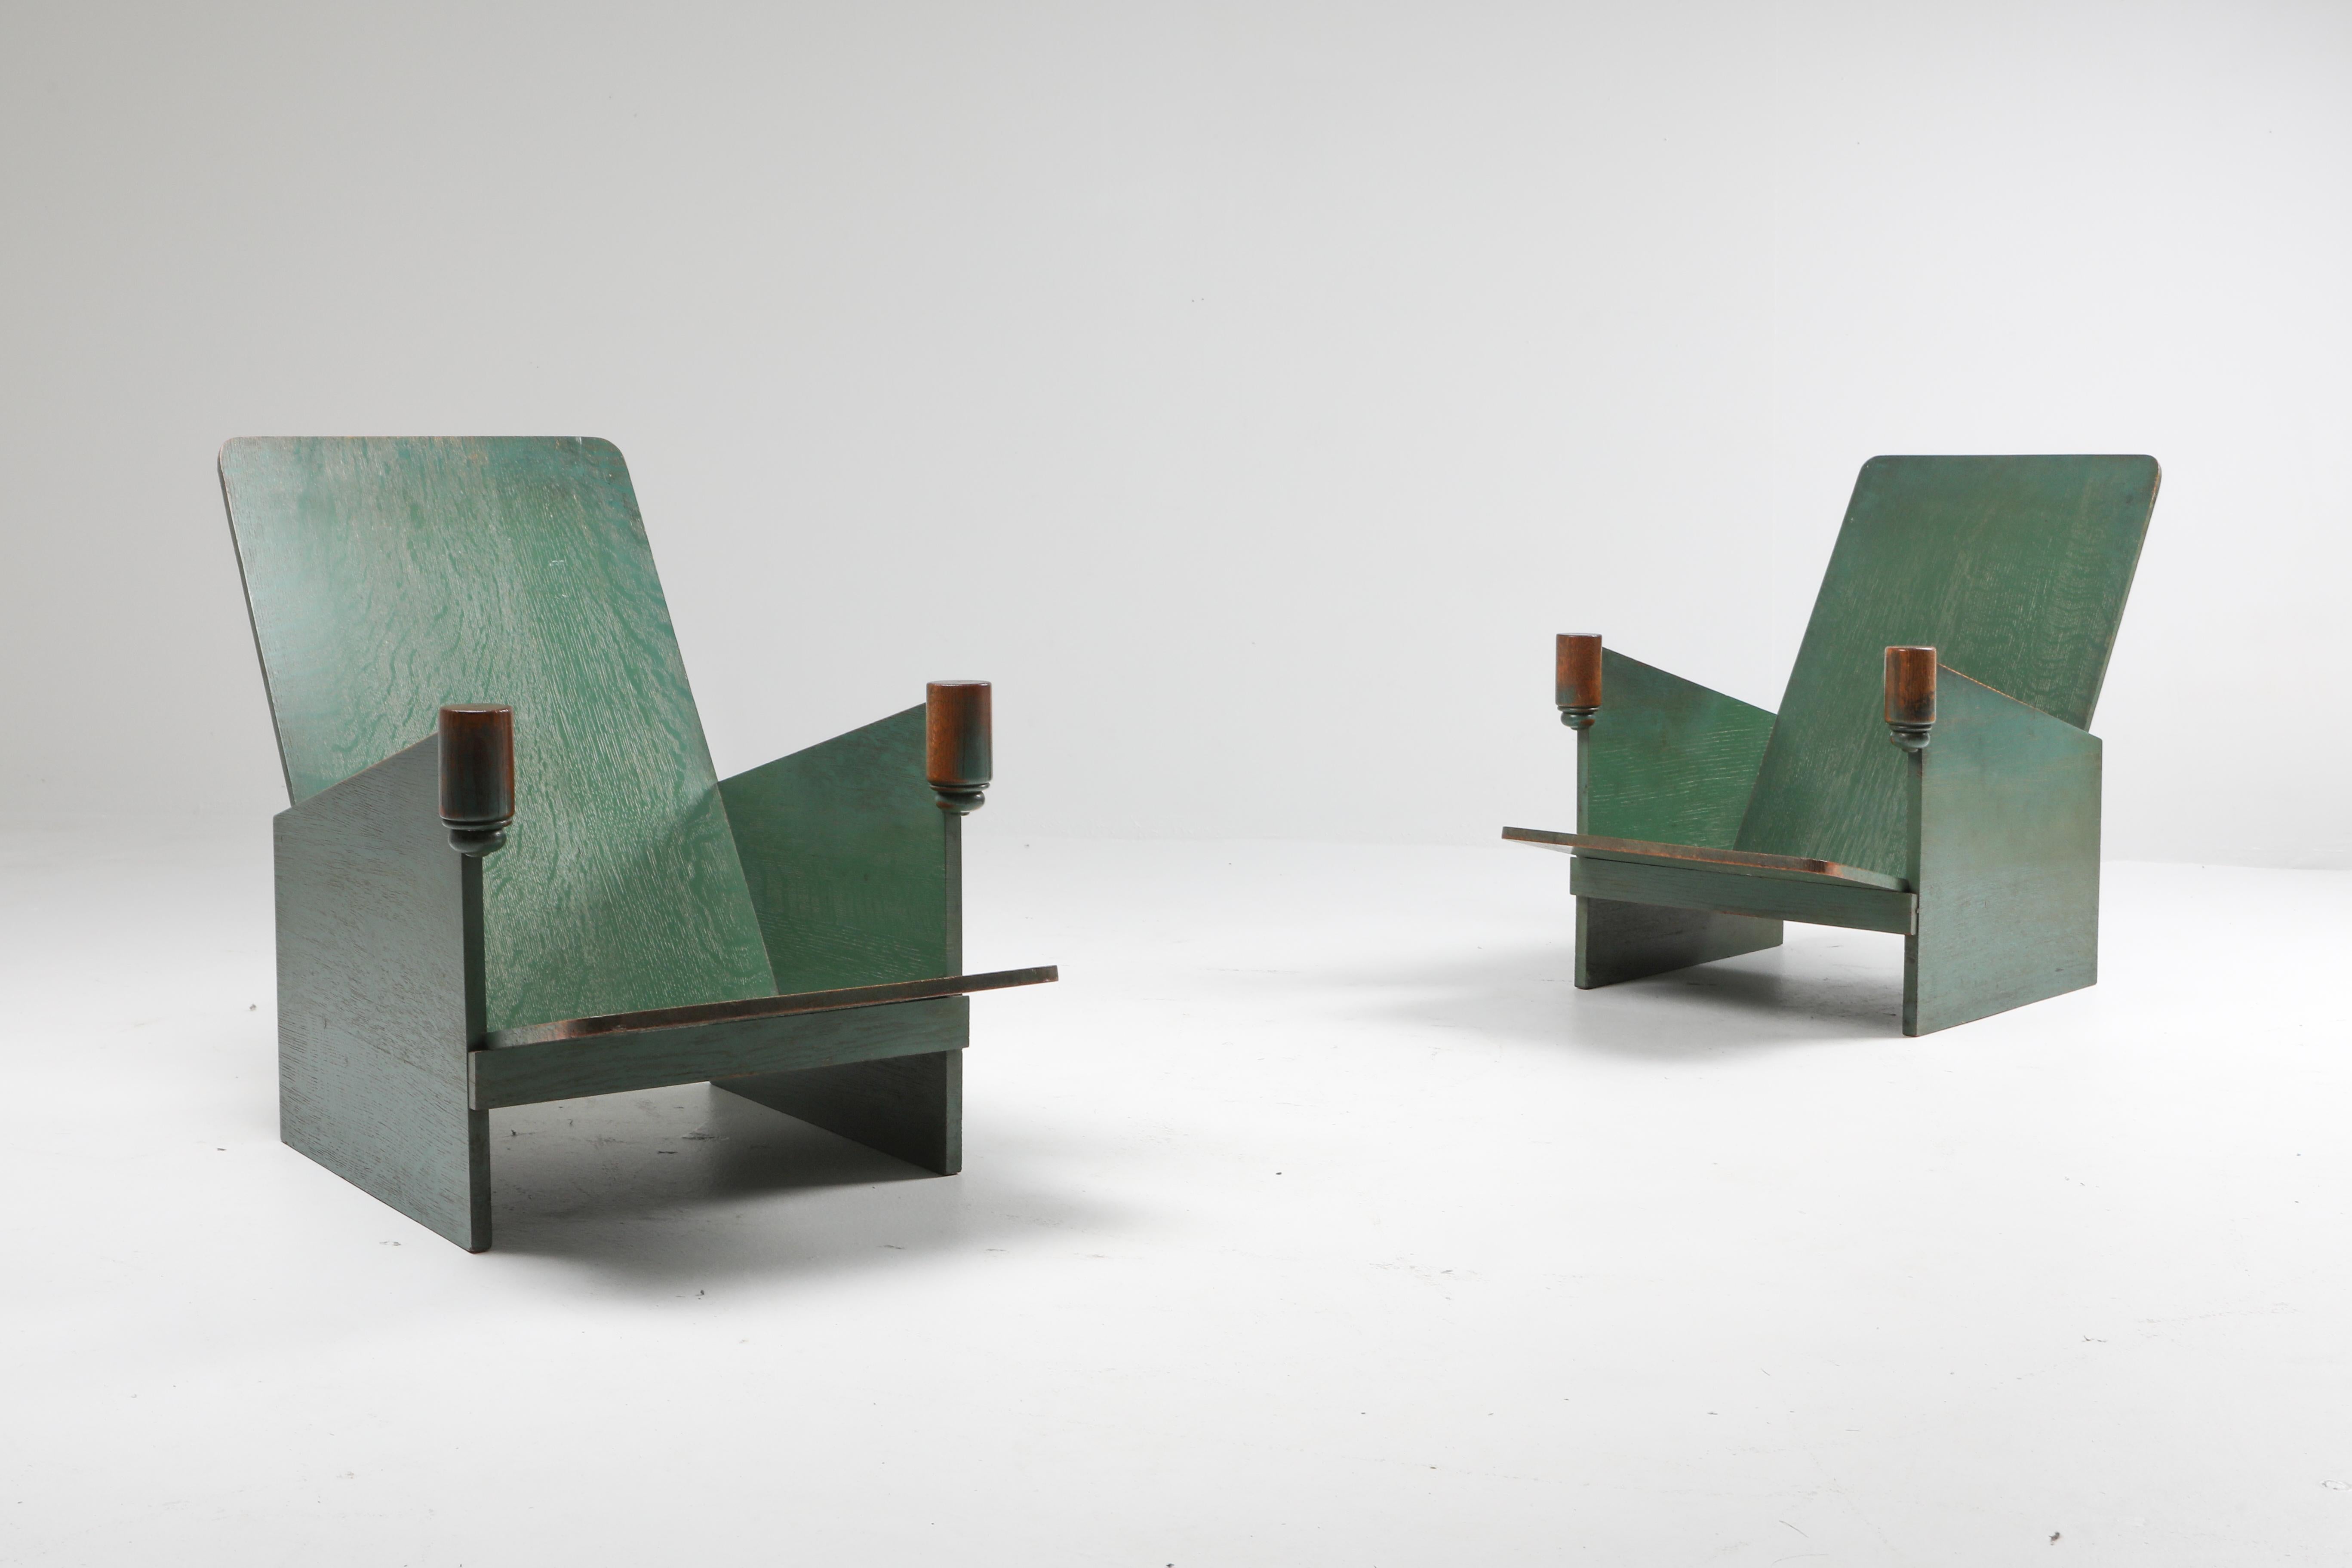 European Constructivist Pair of Green Lounge Chairs, Belgium, 1920s